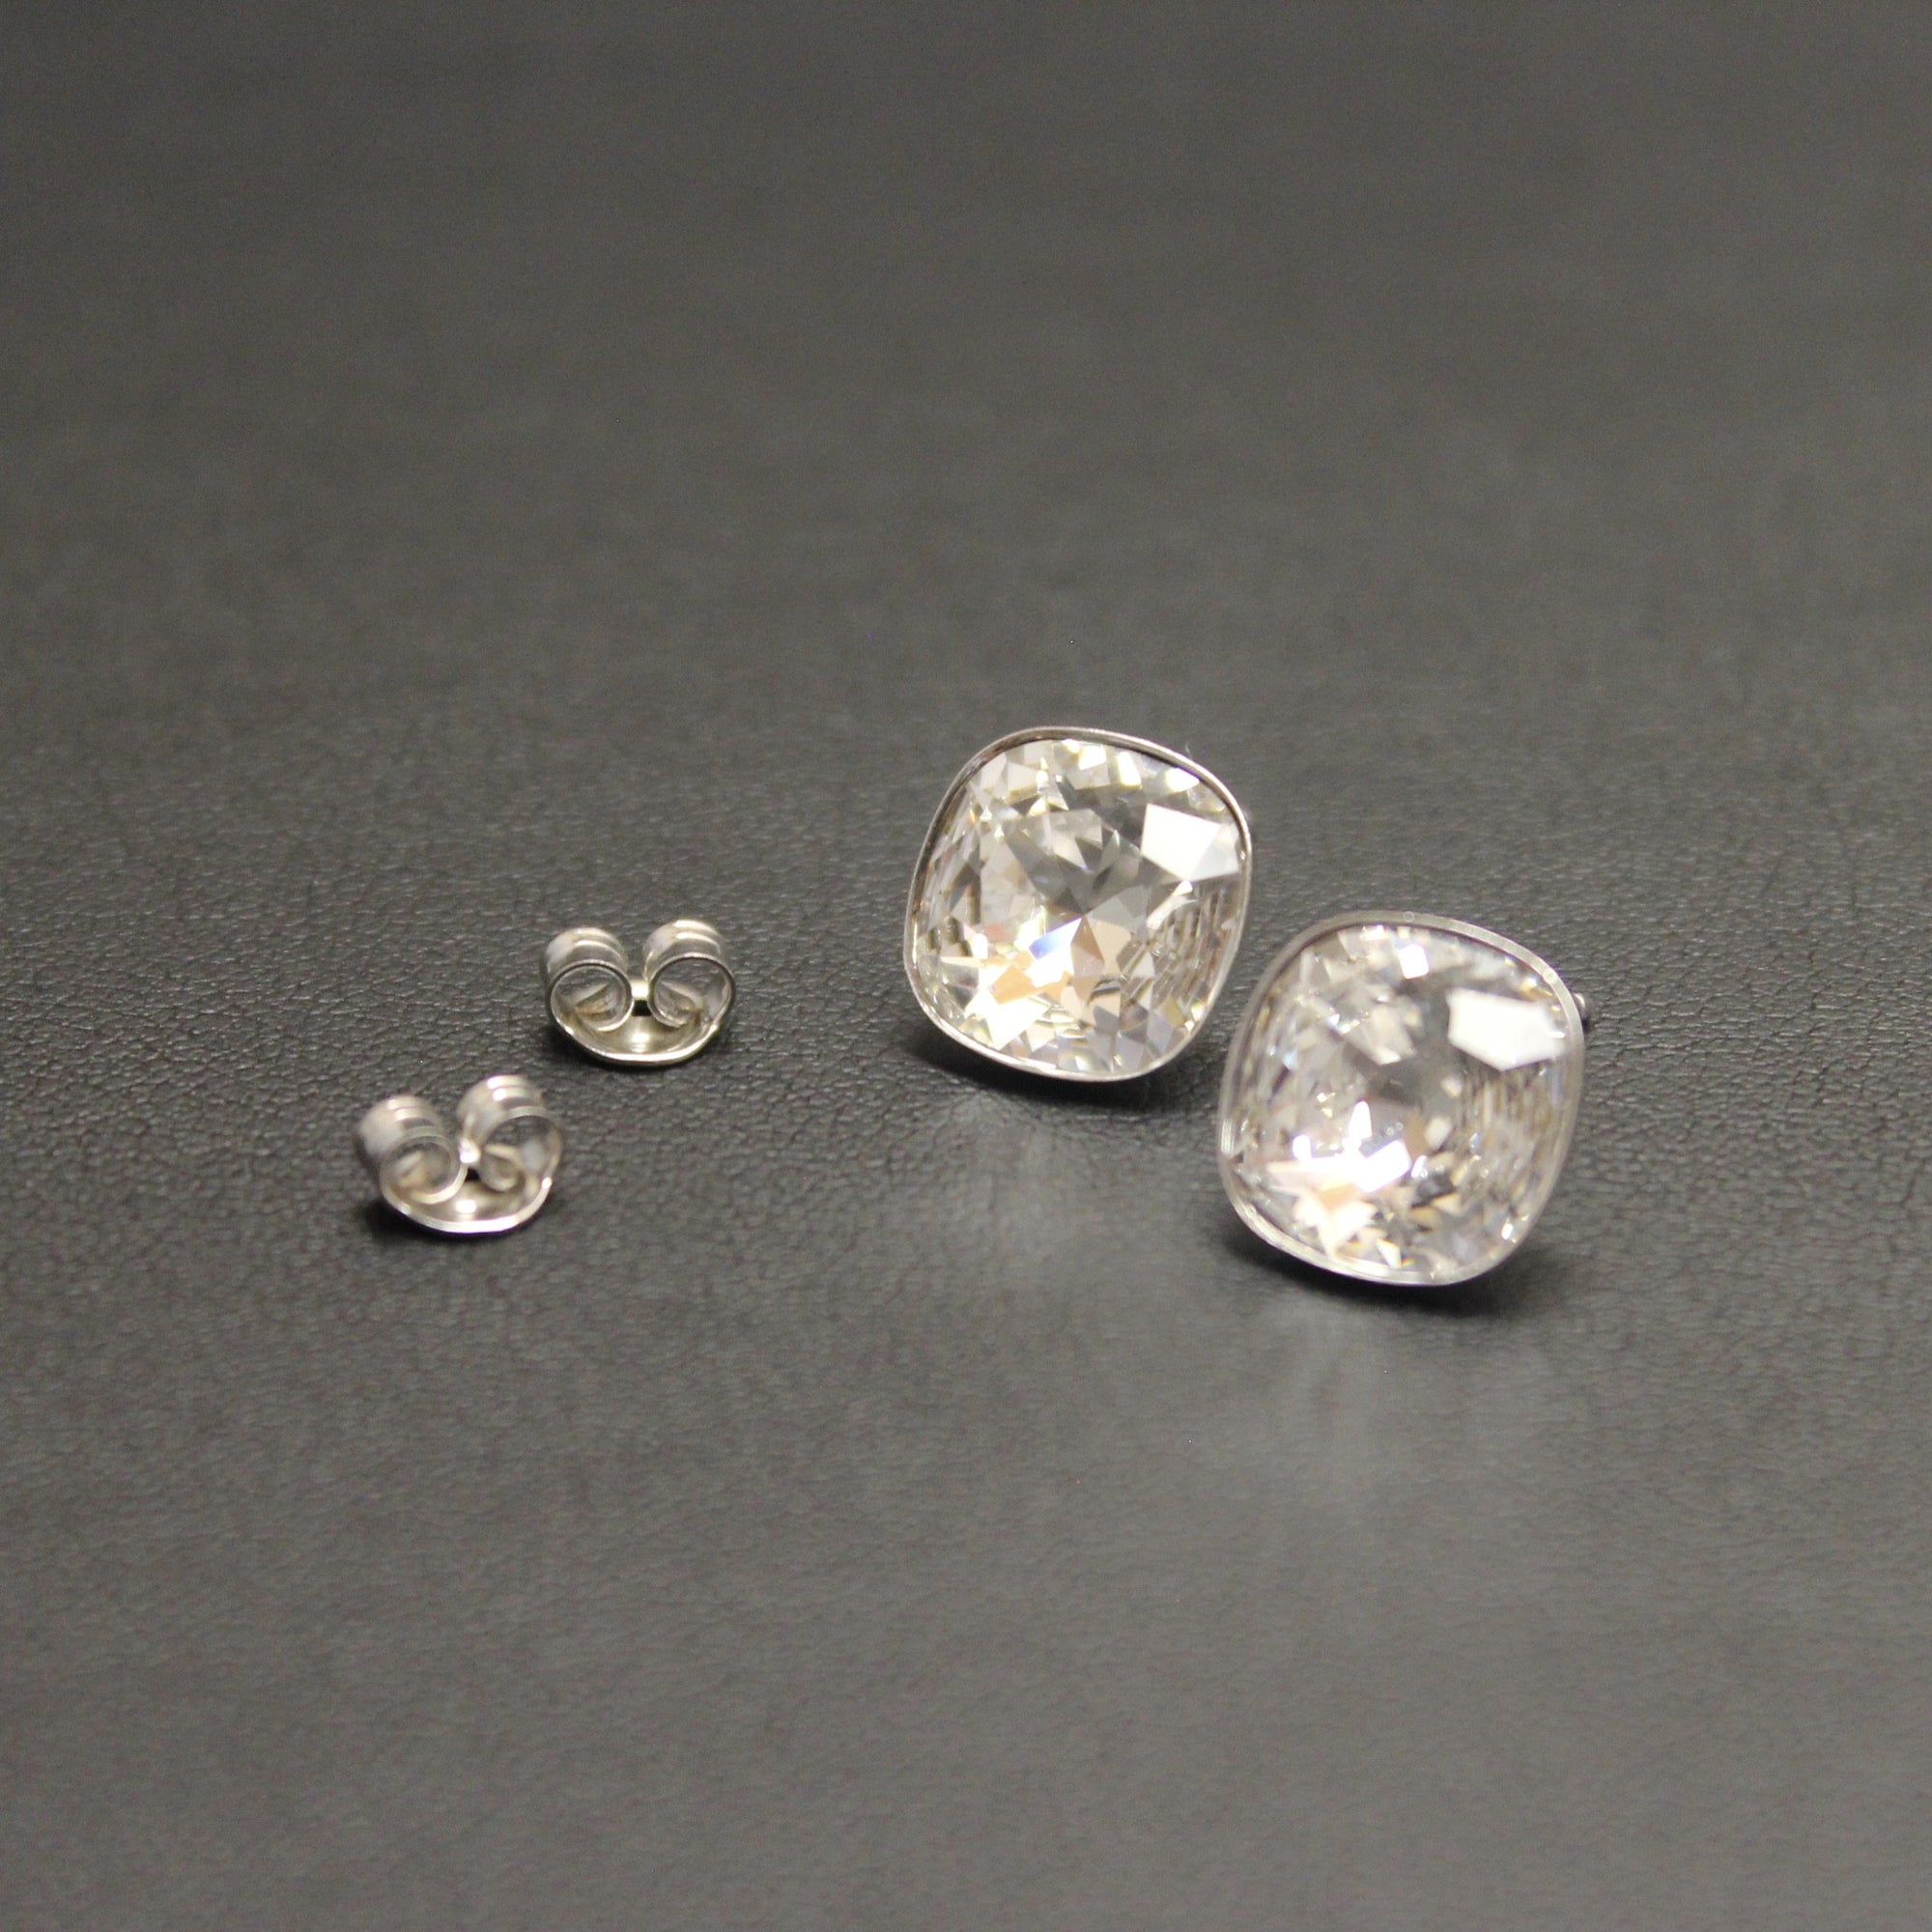 Ceroc - Sterling Silver 10mm Stud Earrings (Crystal Clear)